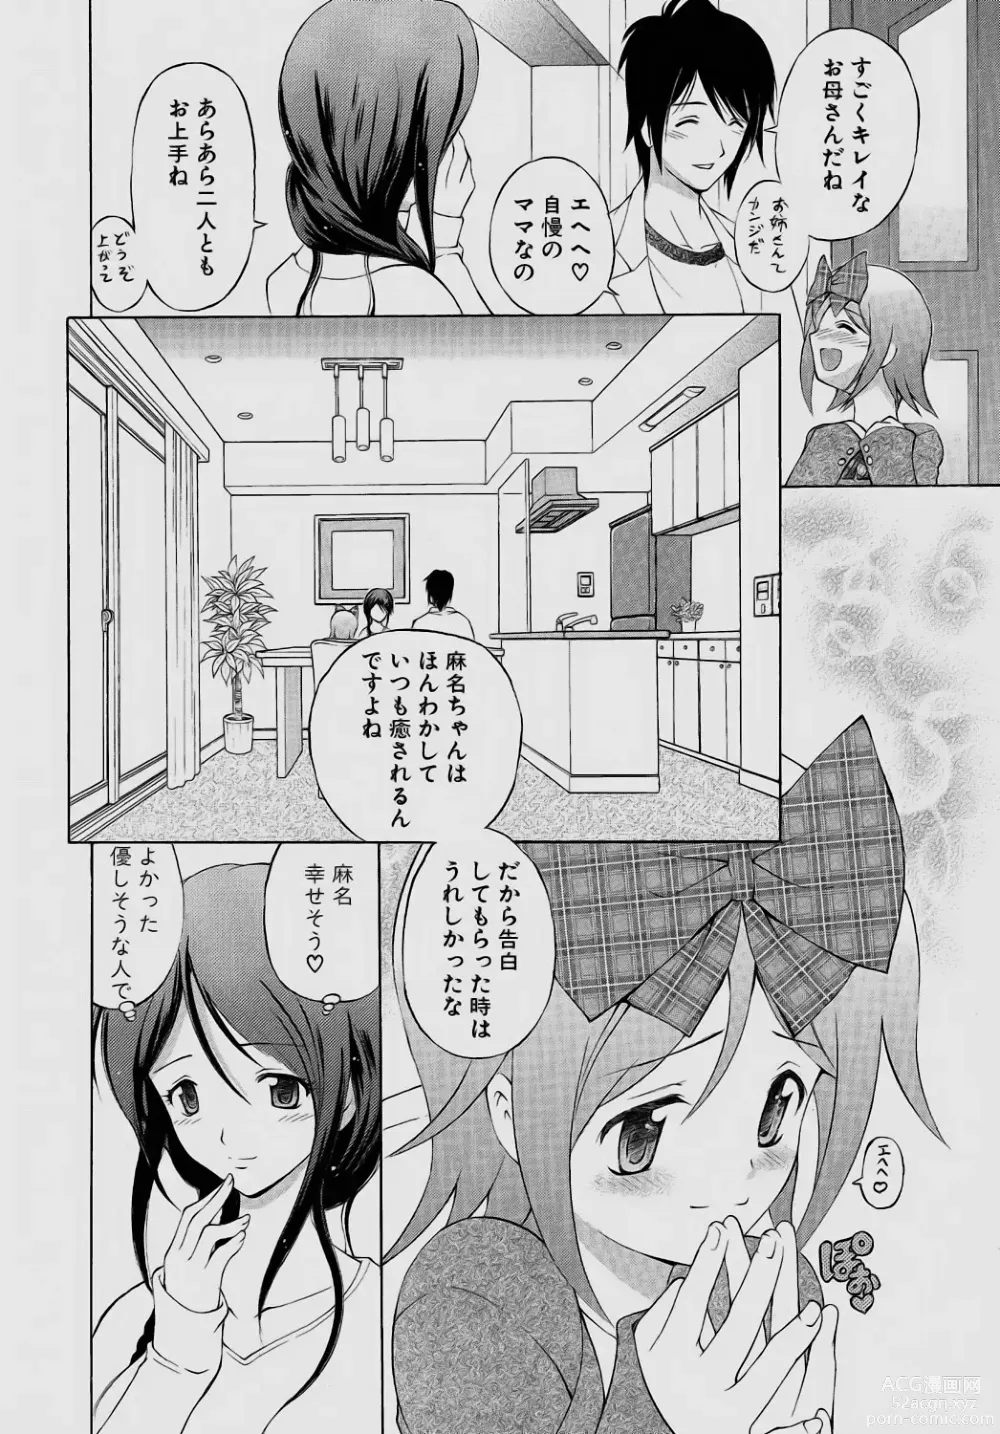 Page 6 of manga Sareruga MaMa